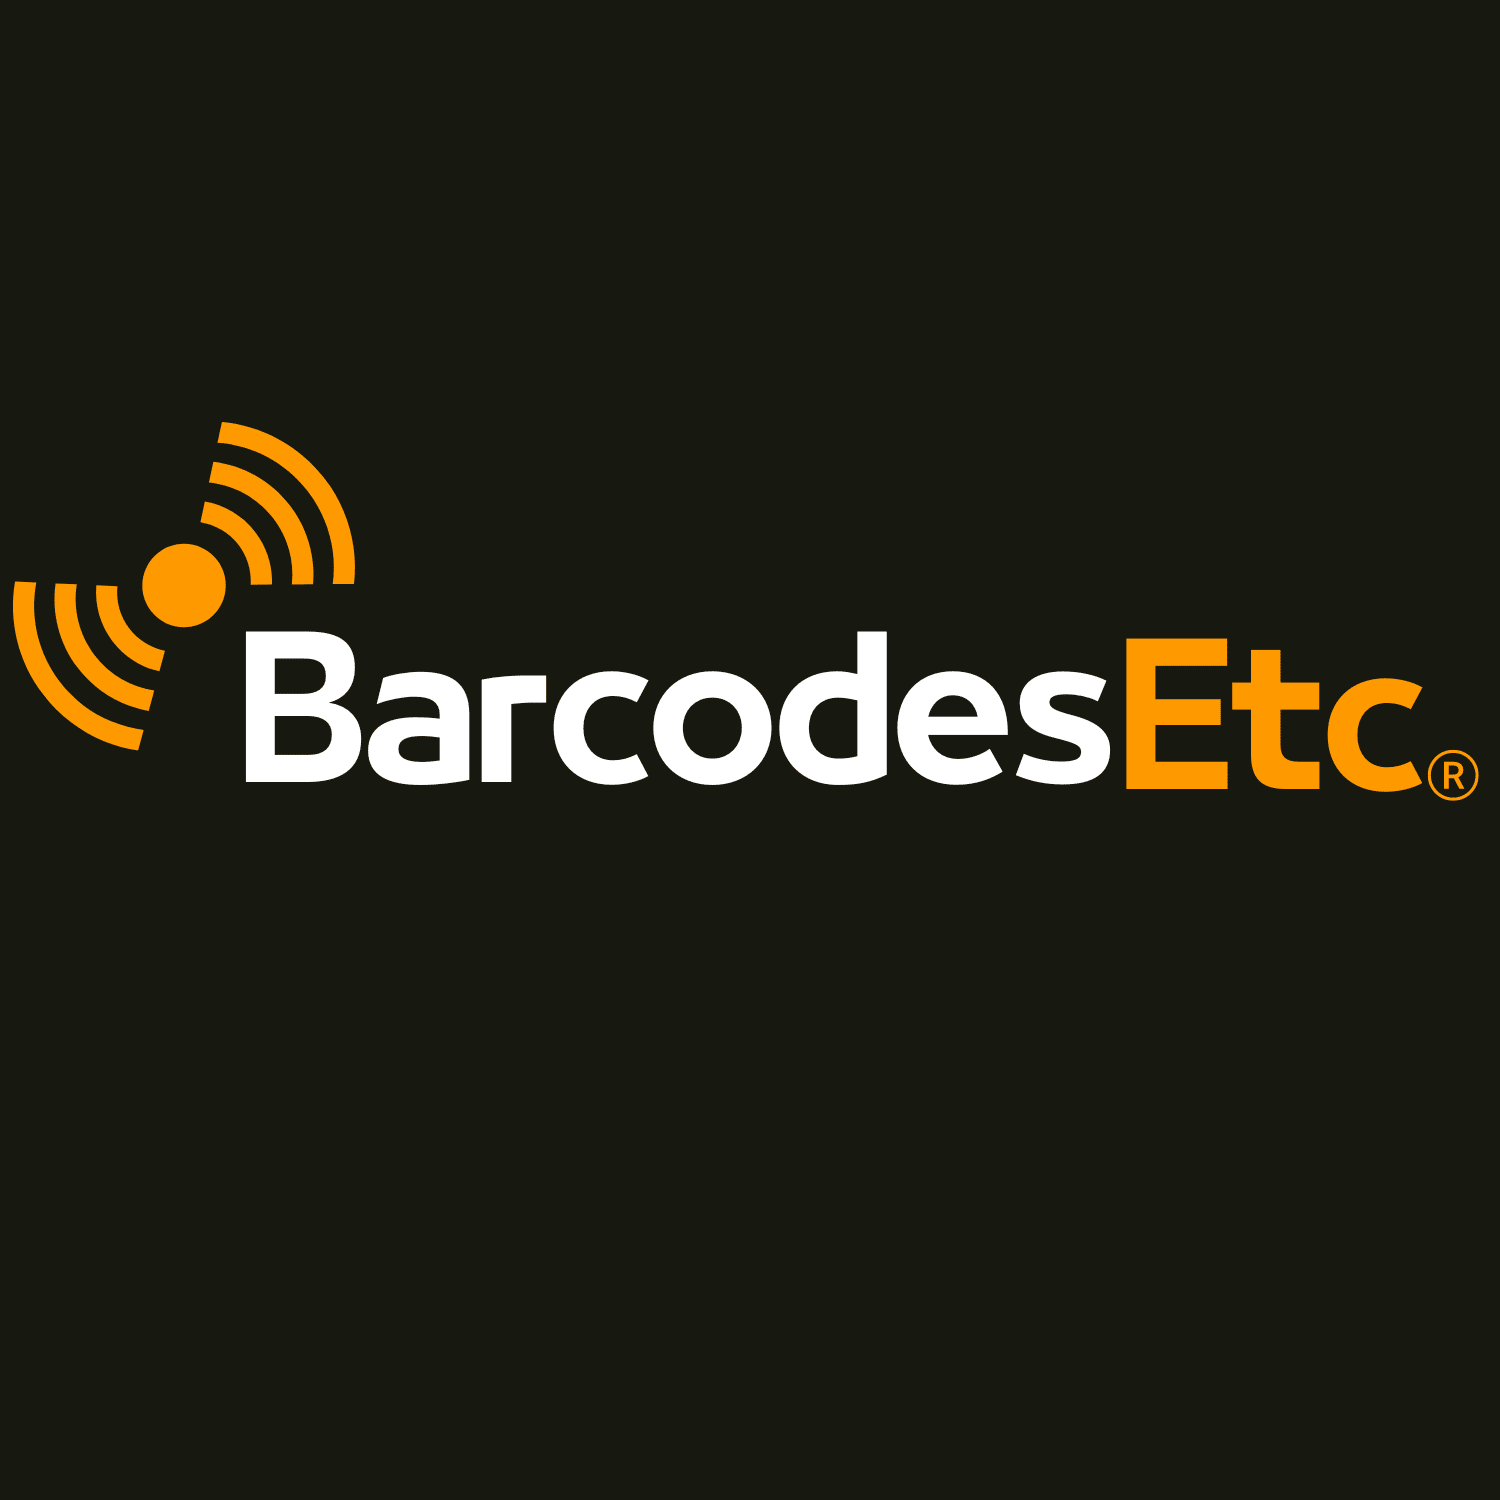 (c) Barcodesetc.com